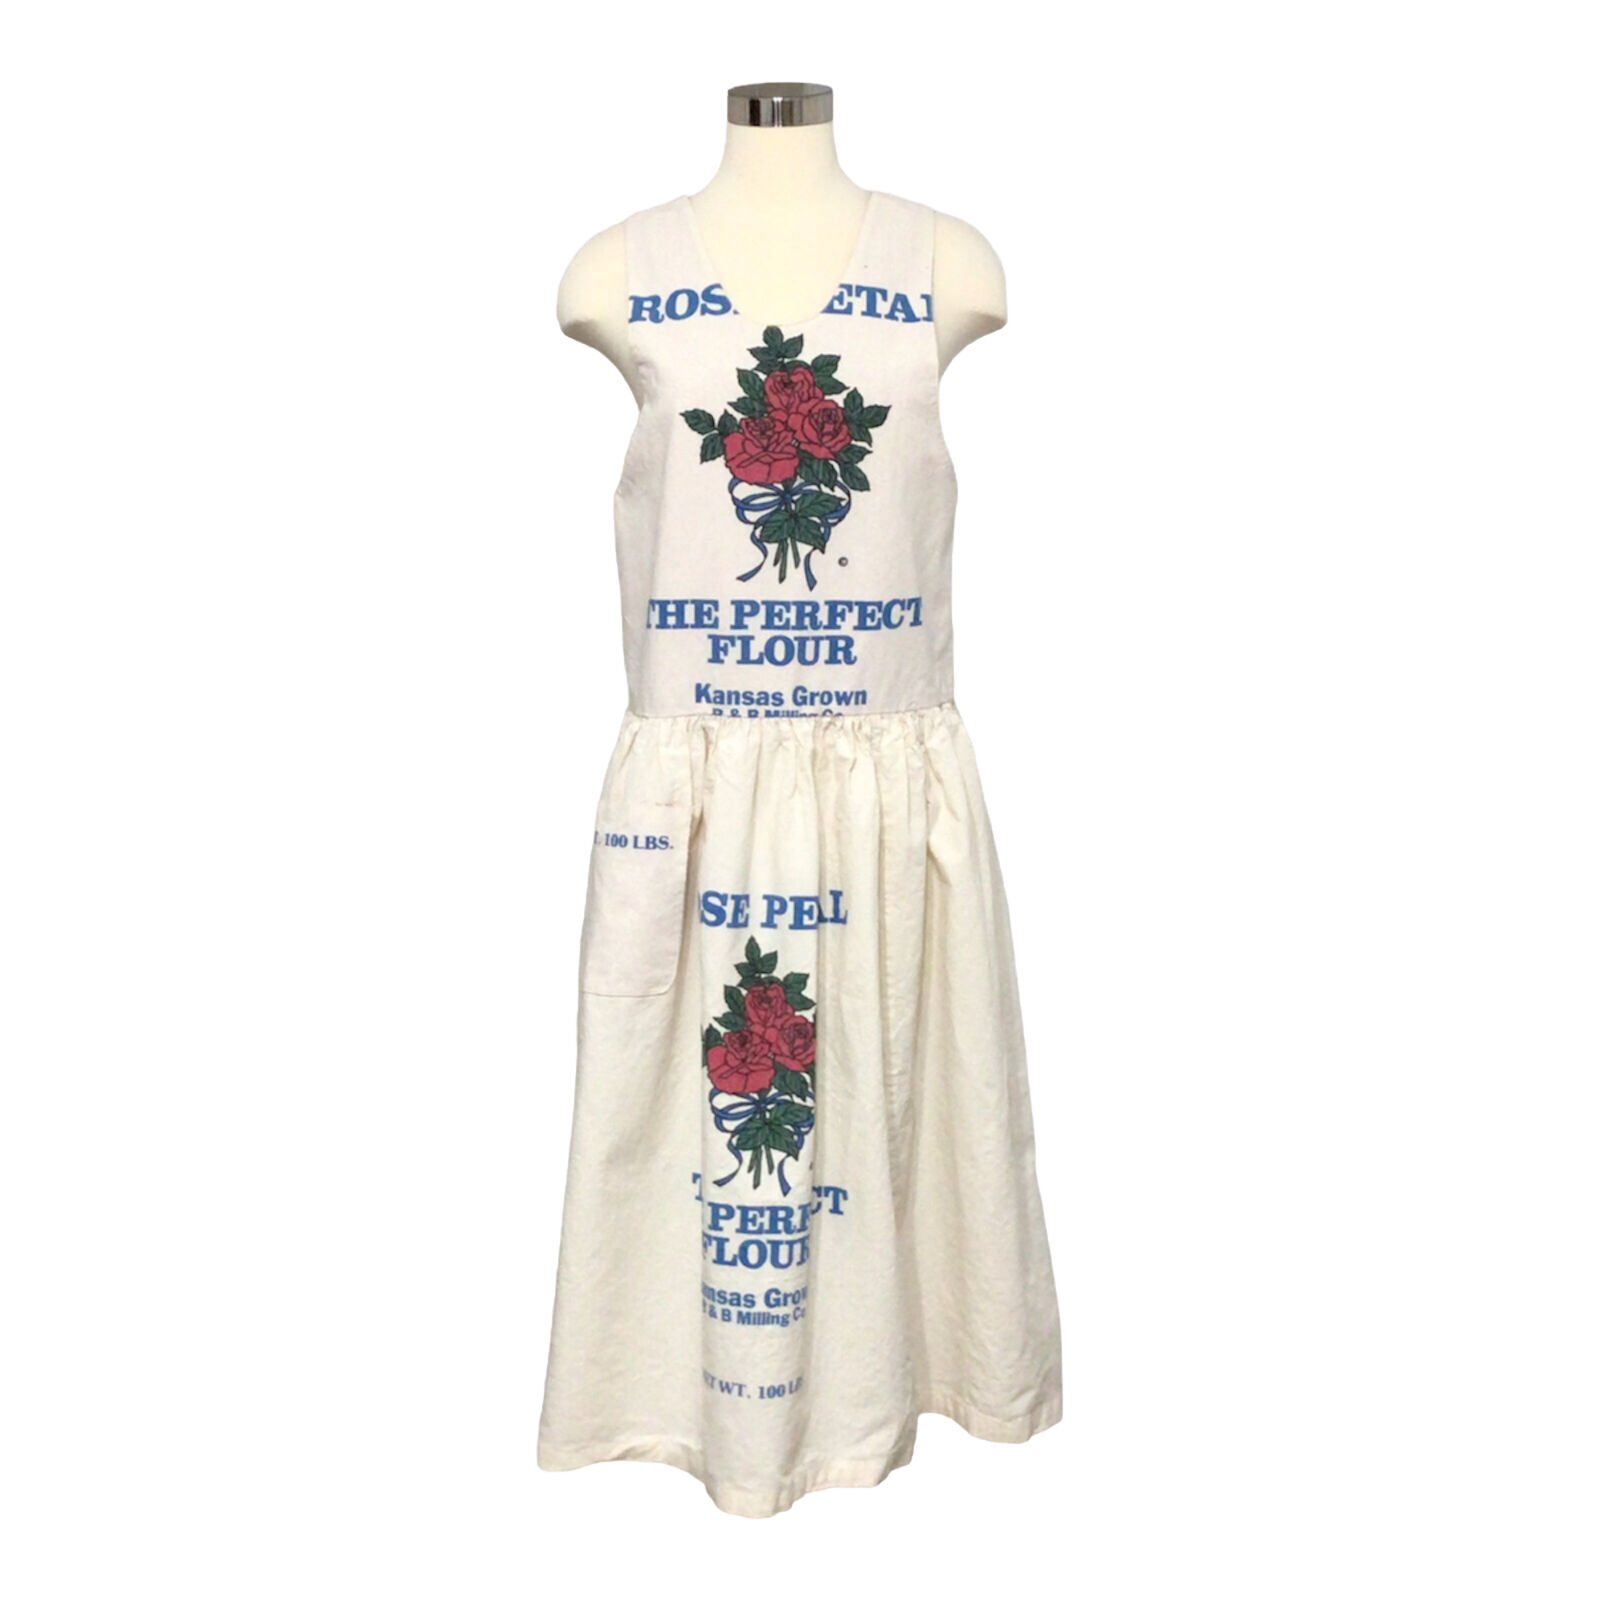 Vintage Handmade Flour Sack Dress Rose Petal Kansas Grown B & B Milling Co.